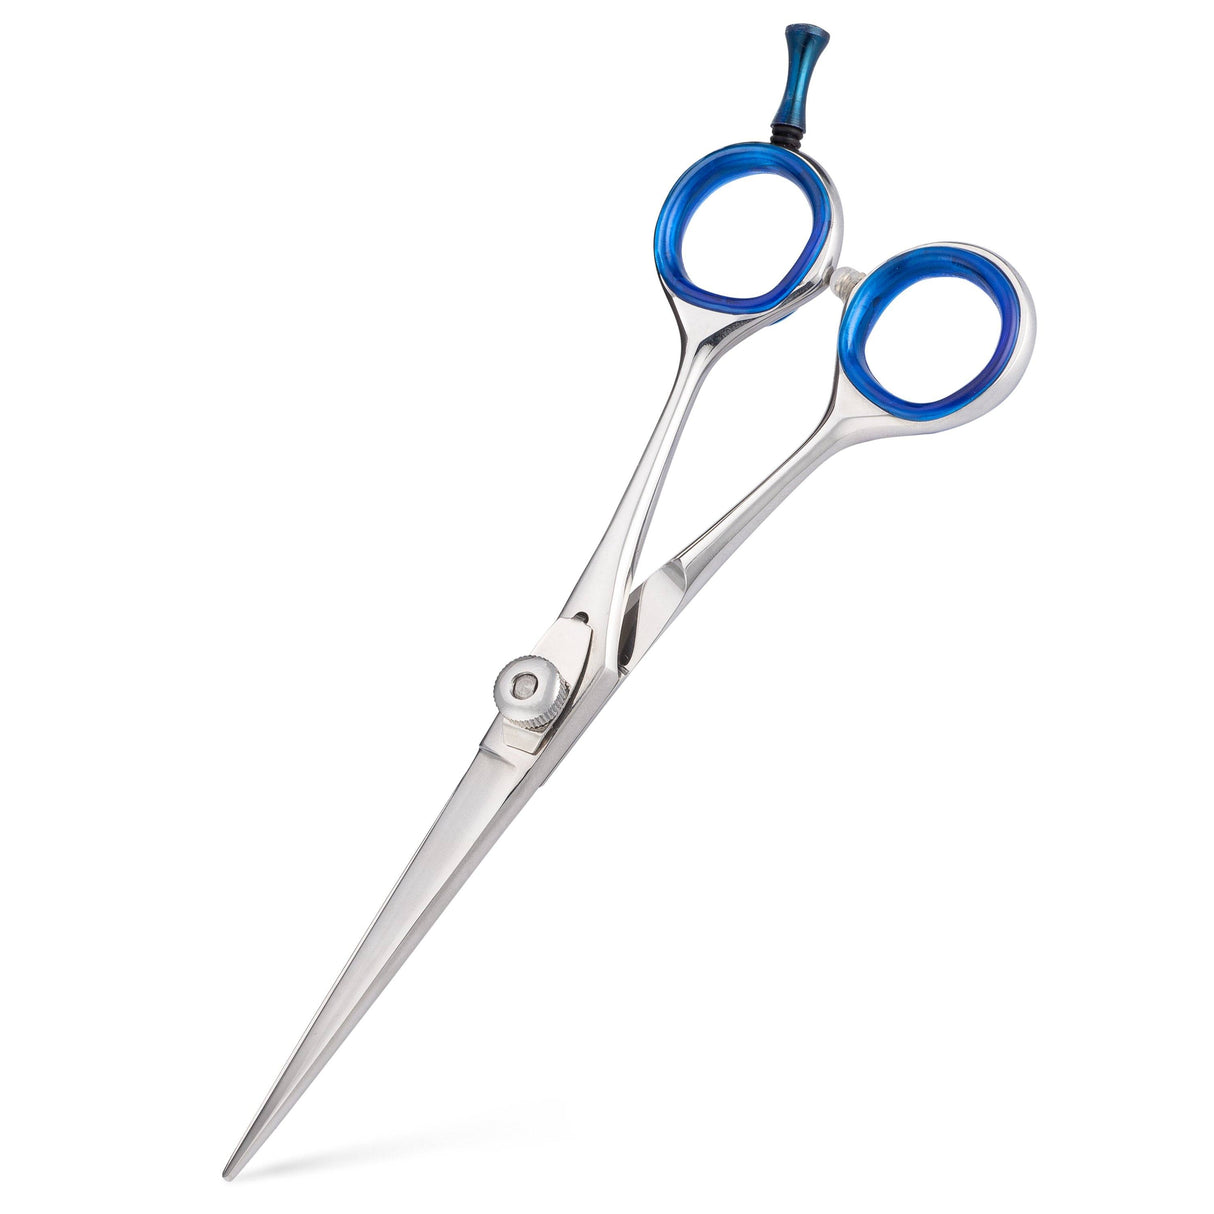 How to hold hairdressing scissors like a professional - Scissor Tech USA